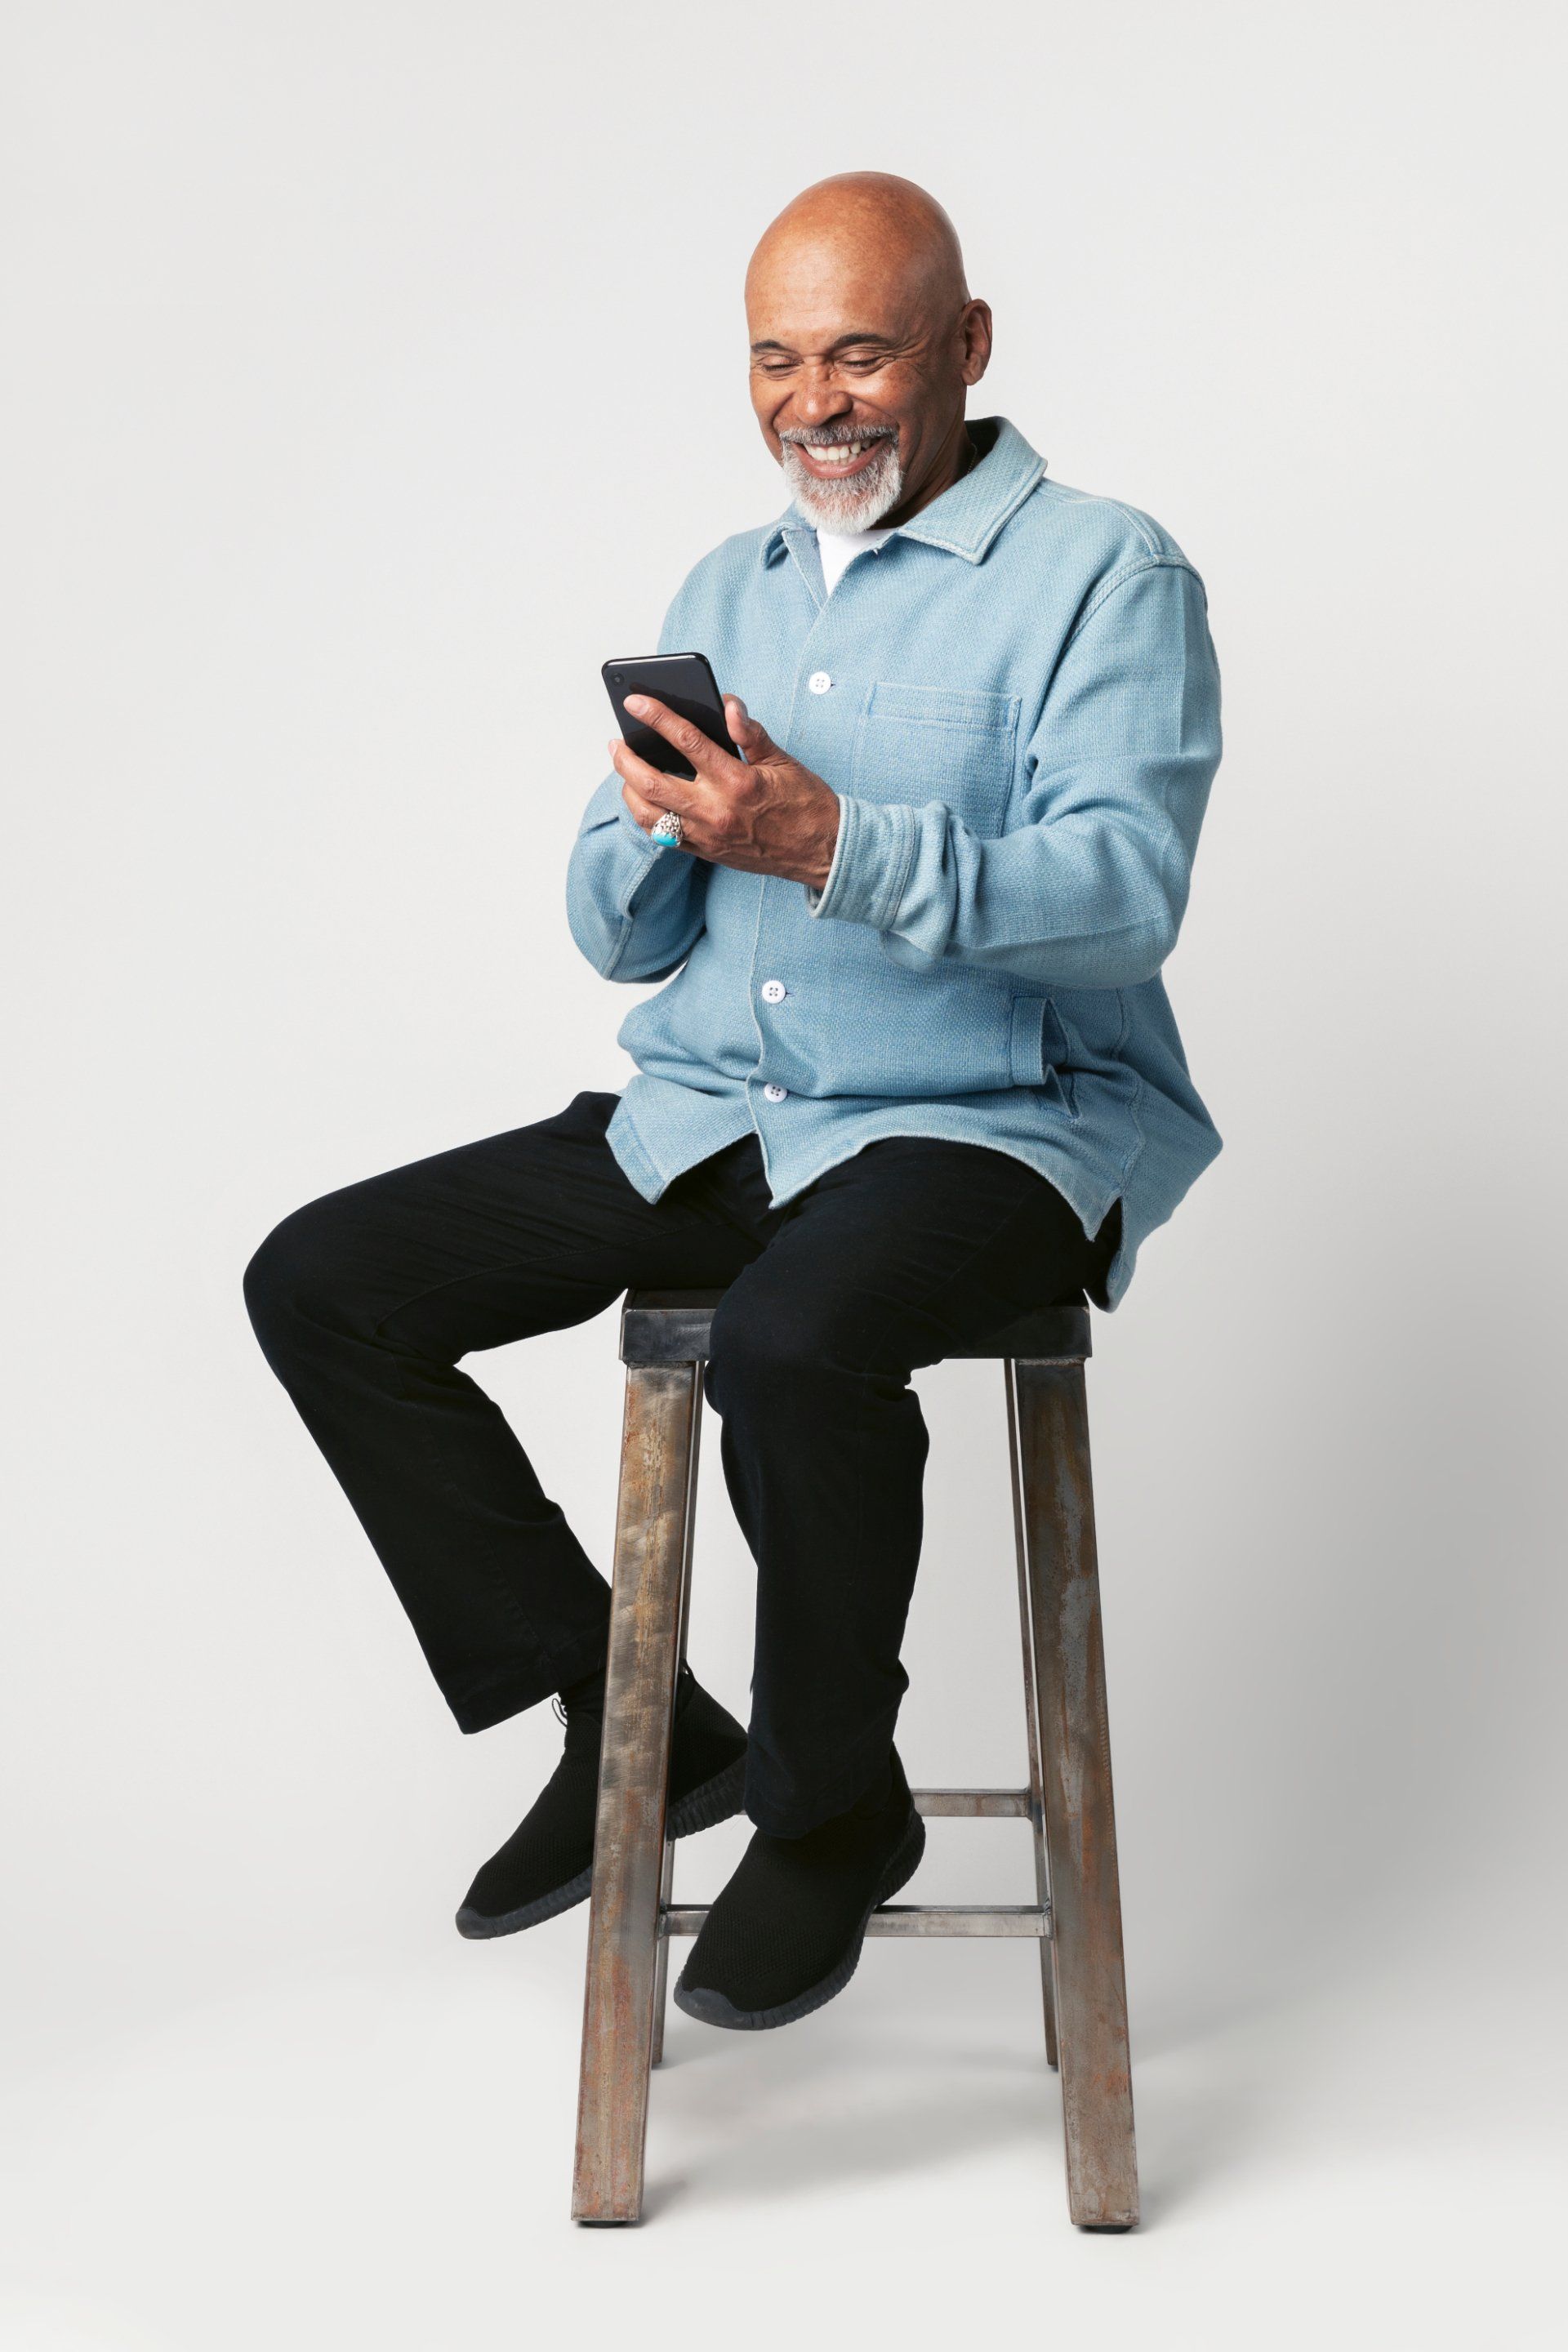 senior black man sitting on stool using smartphone